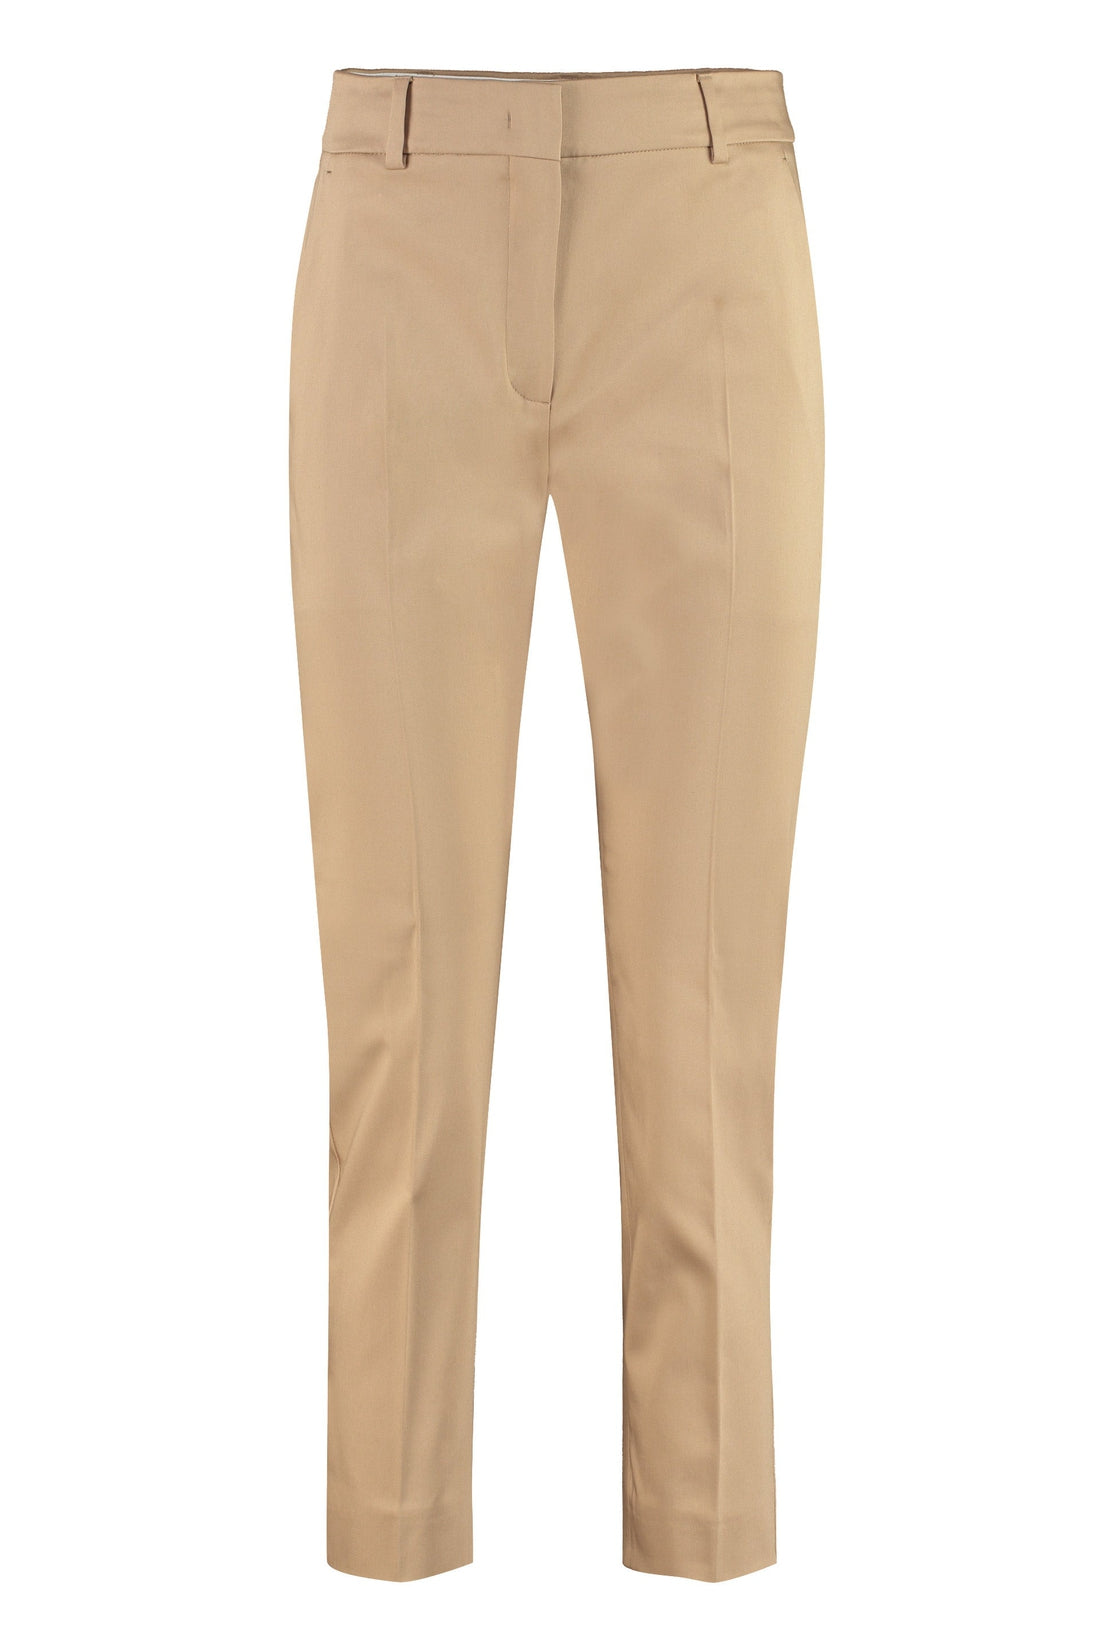 Max Mara-OUTLET-SALE-Calcut tailored trousers-ARCHIVIST